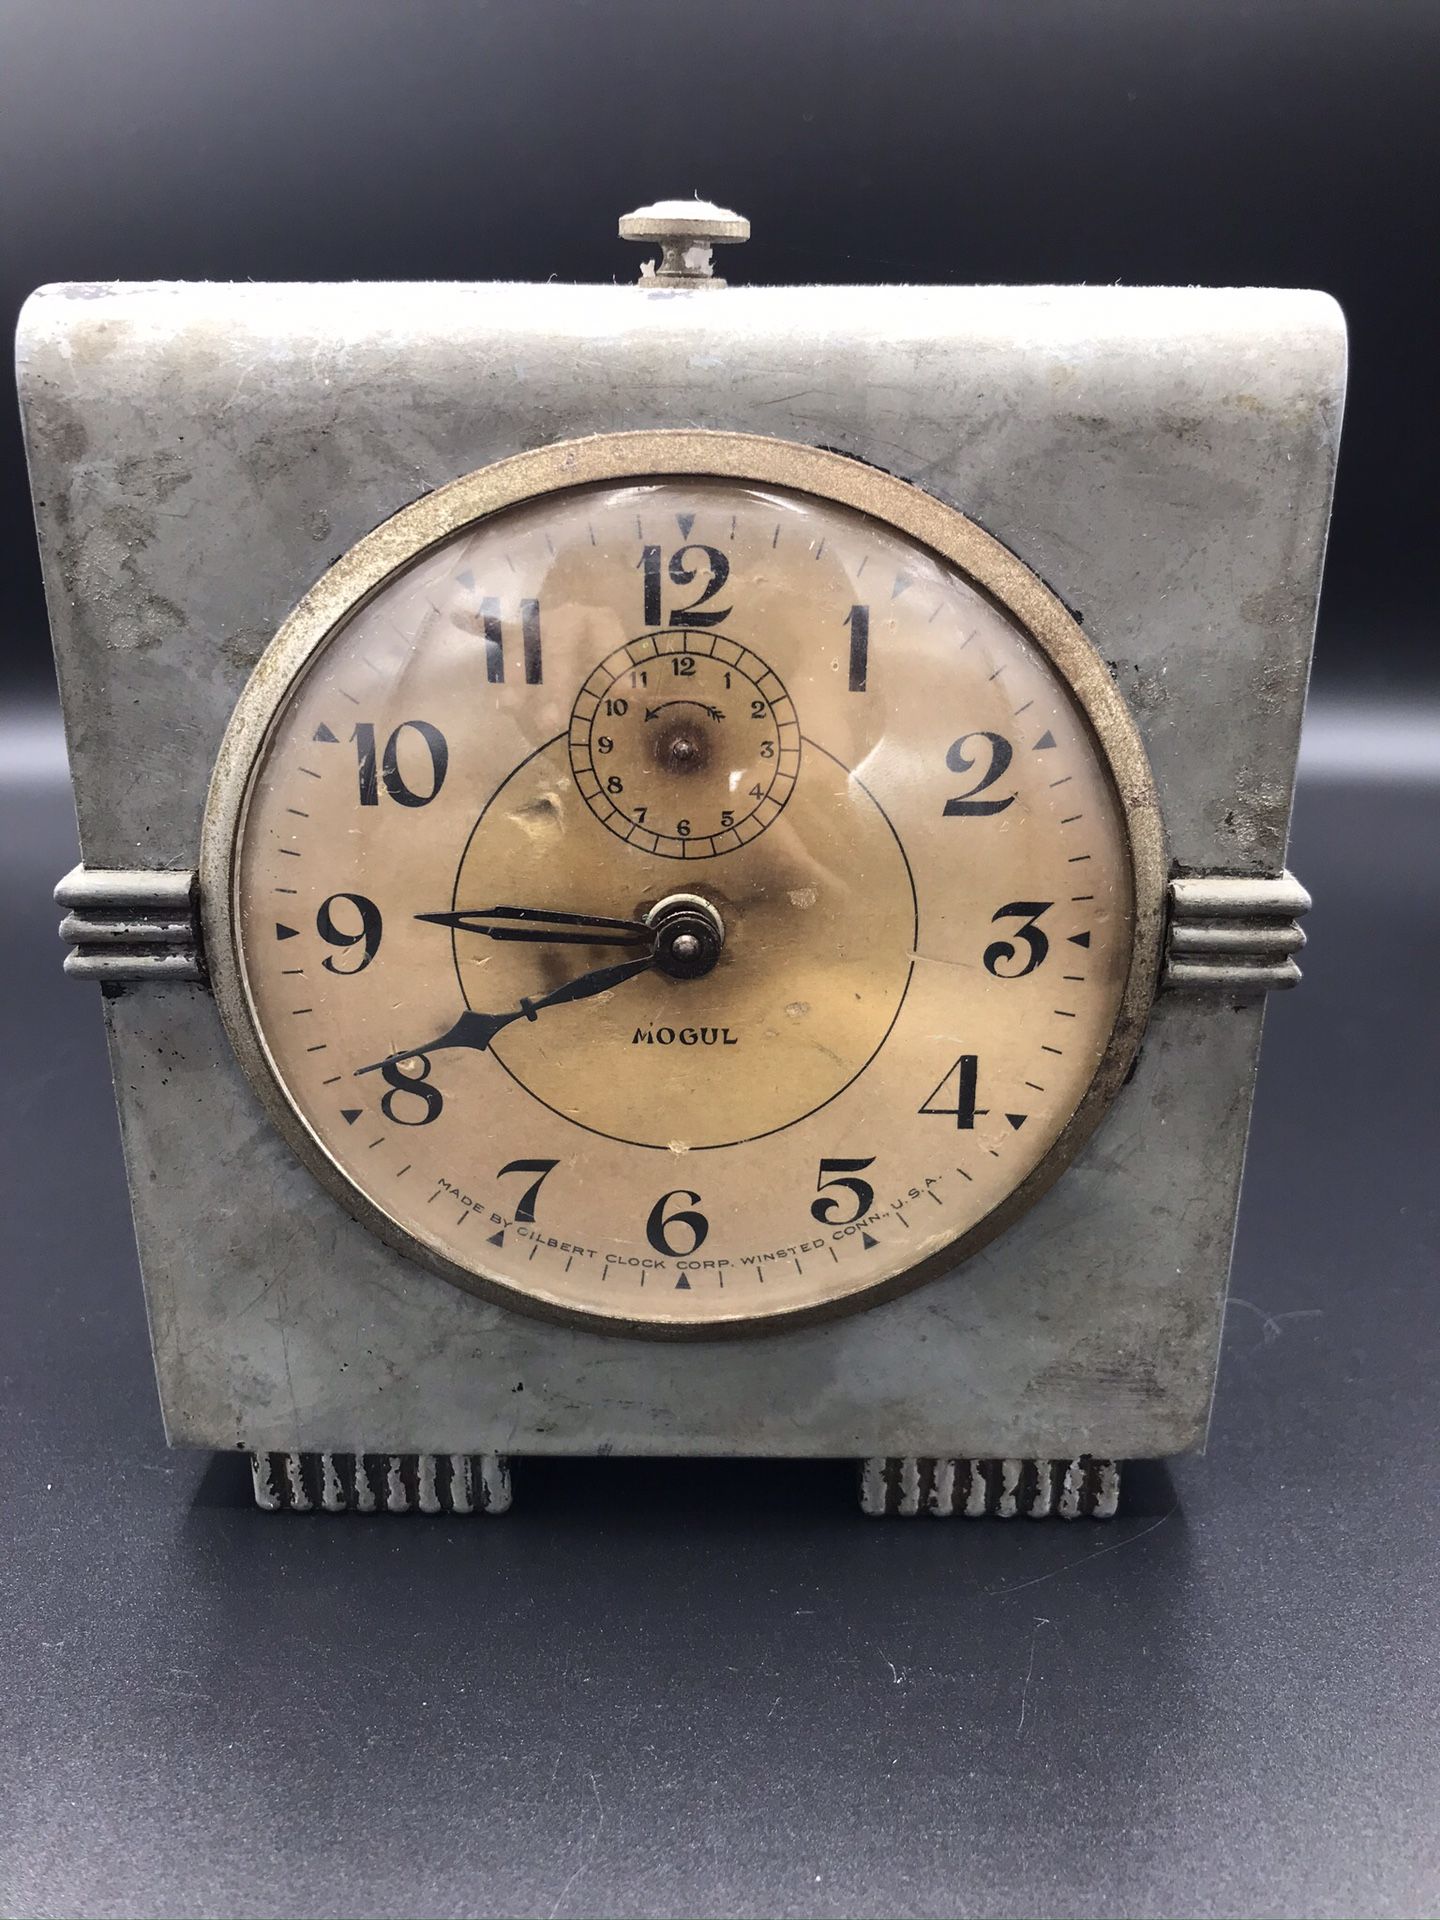 Antique Clock “Mogul” by Gilbert Clock Corp.